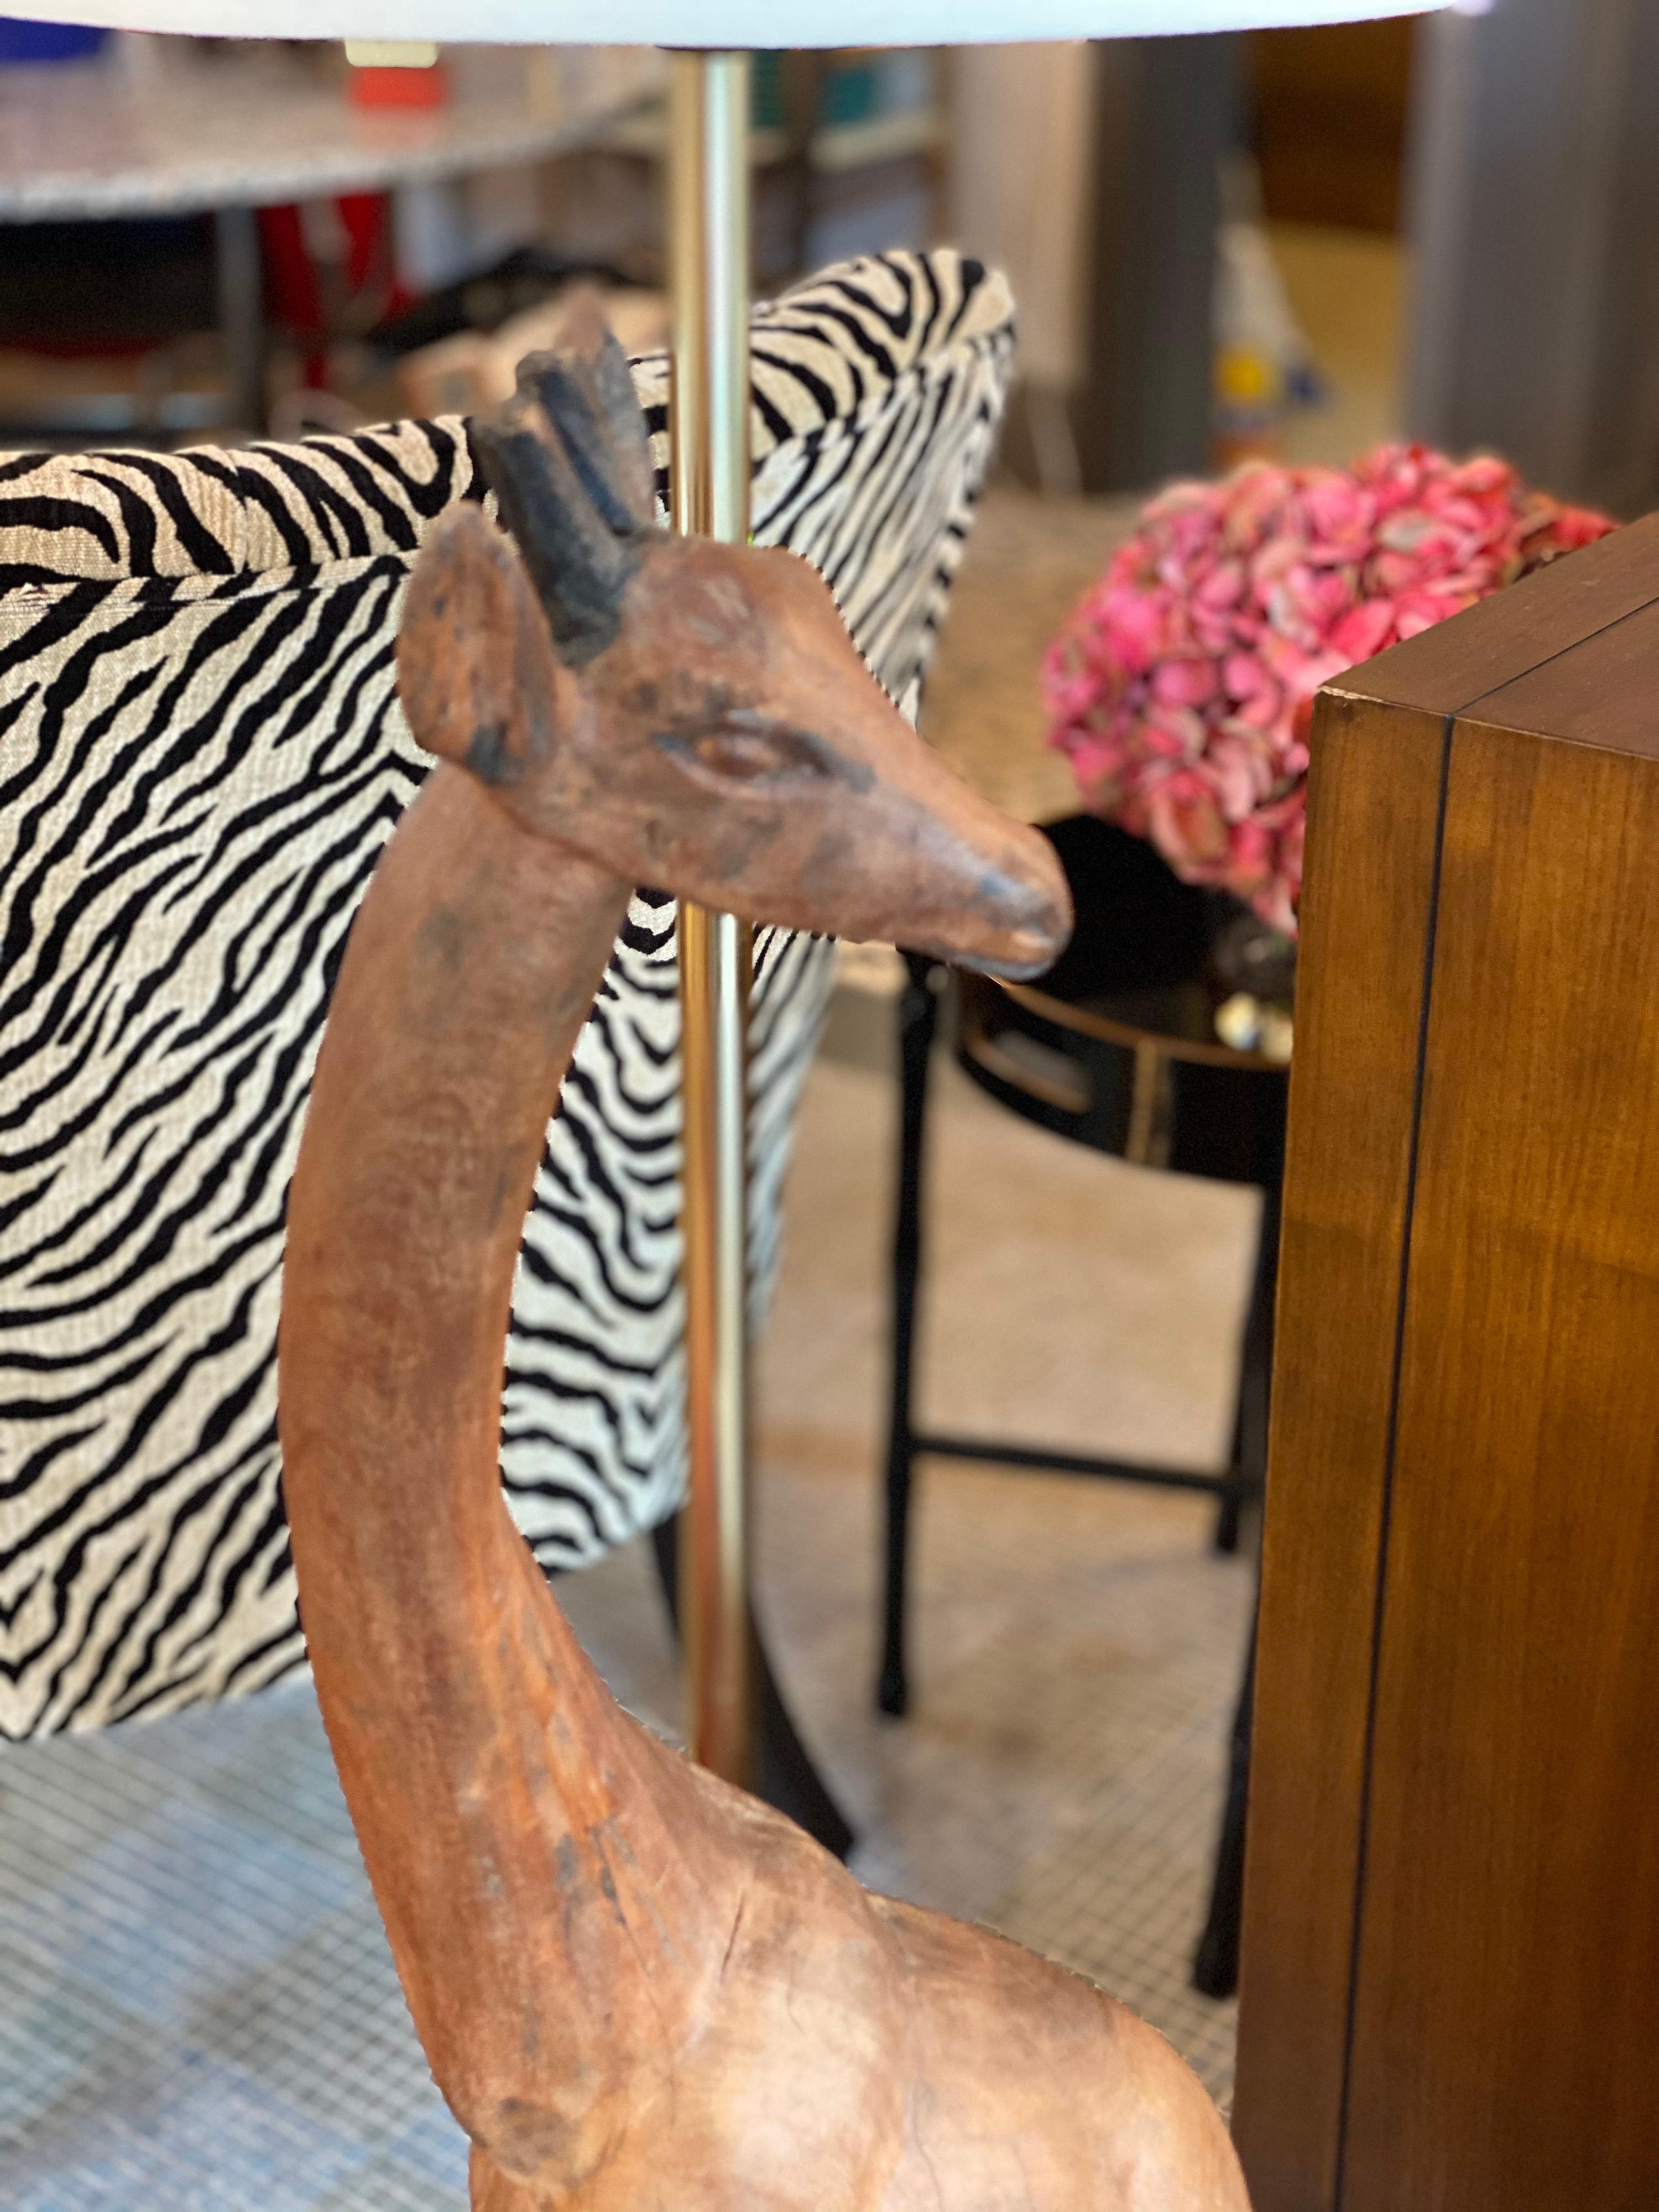 Carved wooden giraffe floor lamp

Measures: 56